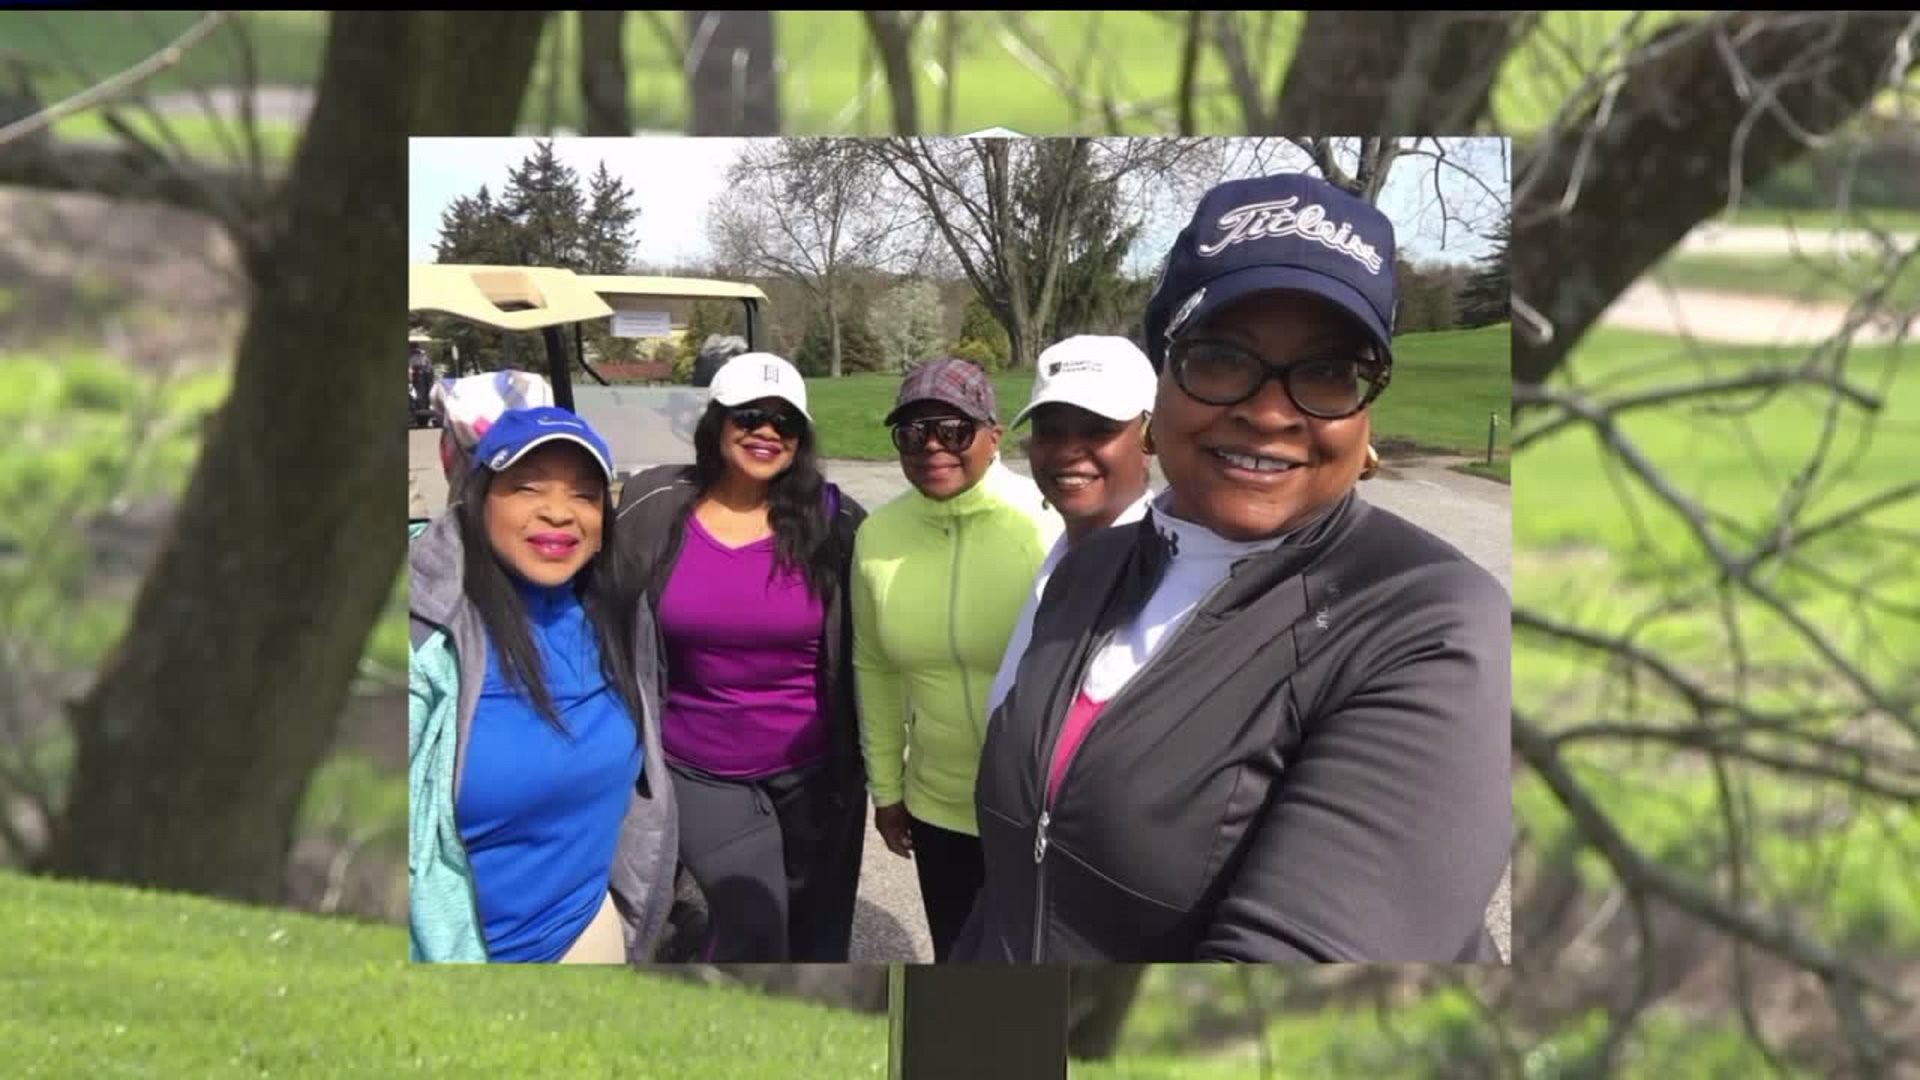 Women claim discrimination at Grandview Golf Club